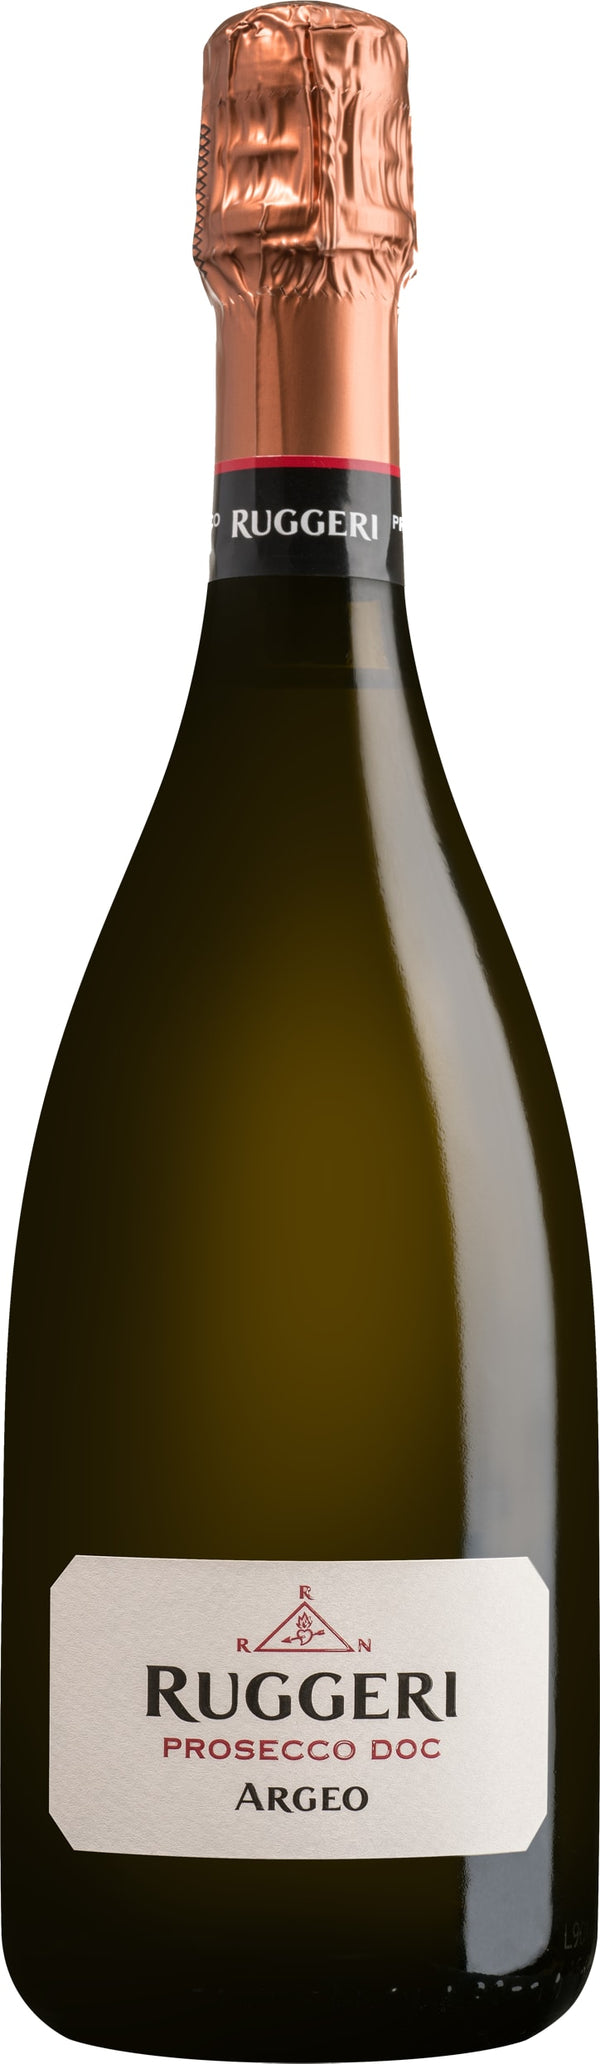 Ruggeri Argeo Prosecco Brut NV6x75cl - Just Wines 